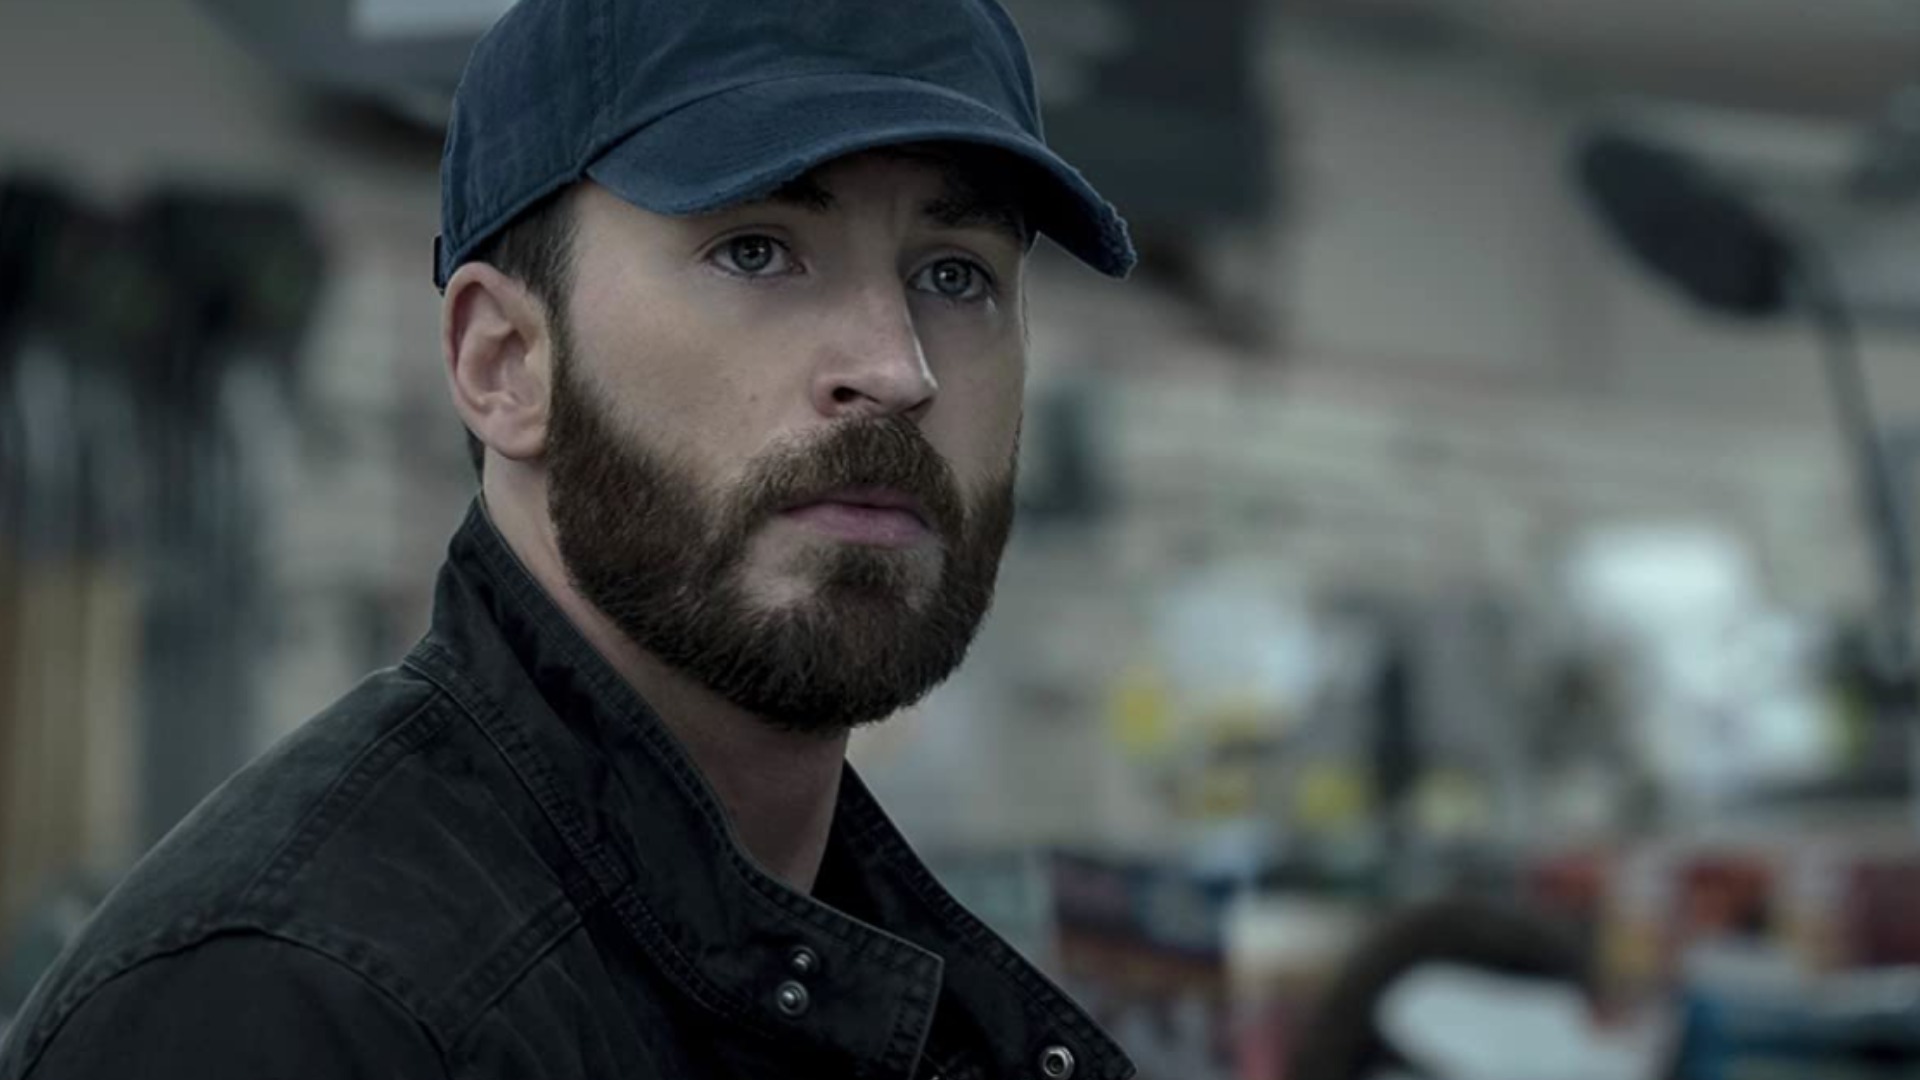 The Gray Man' review: Ryan Gosling's new Netflix thriller feels